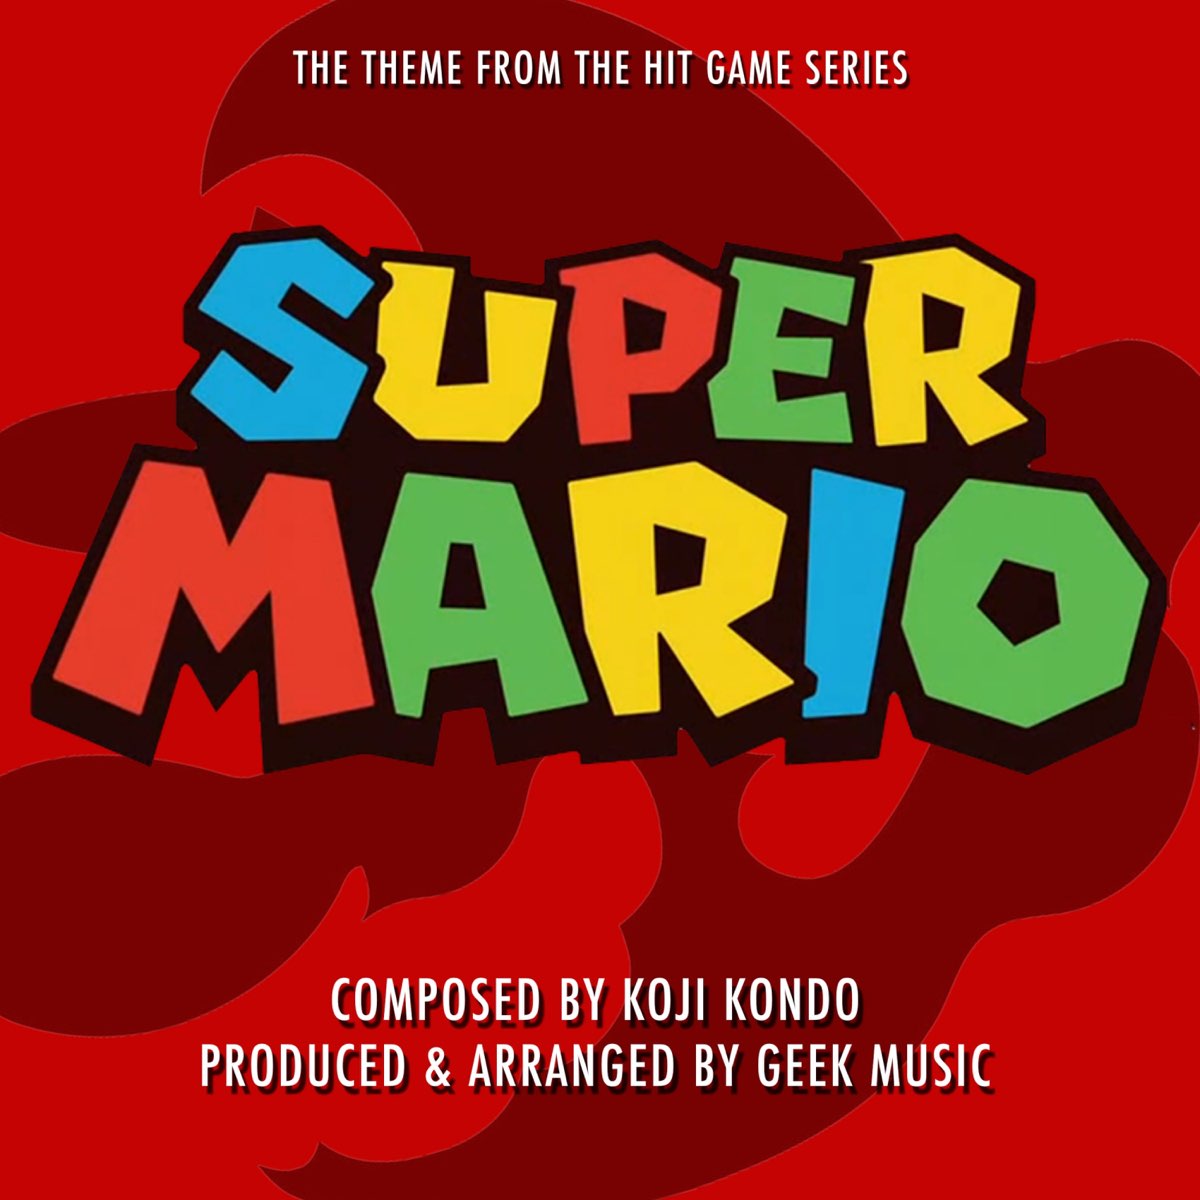 Conheça a letra oficial da música tema de Super Mario Bros.